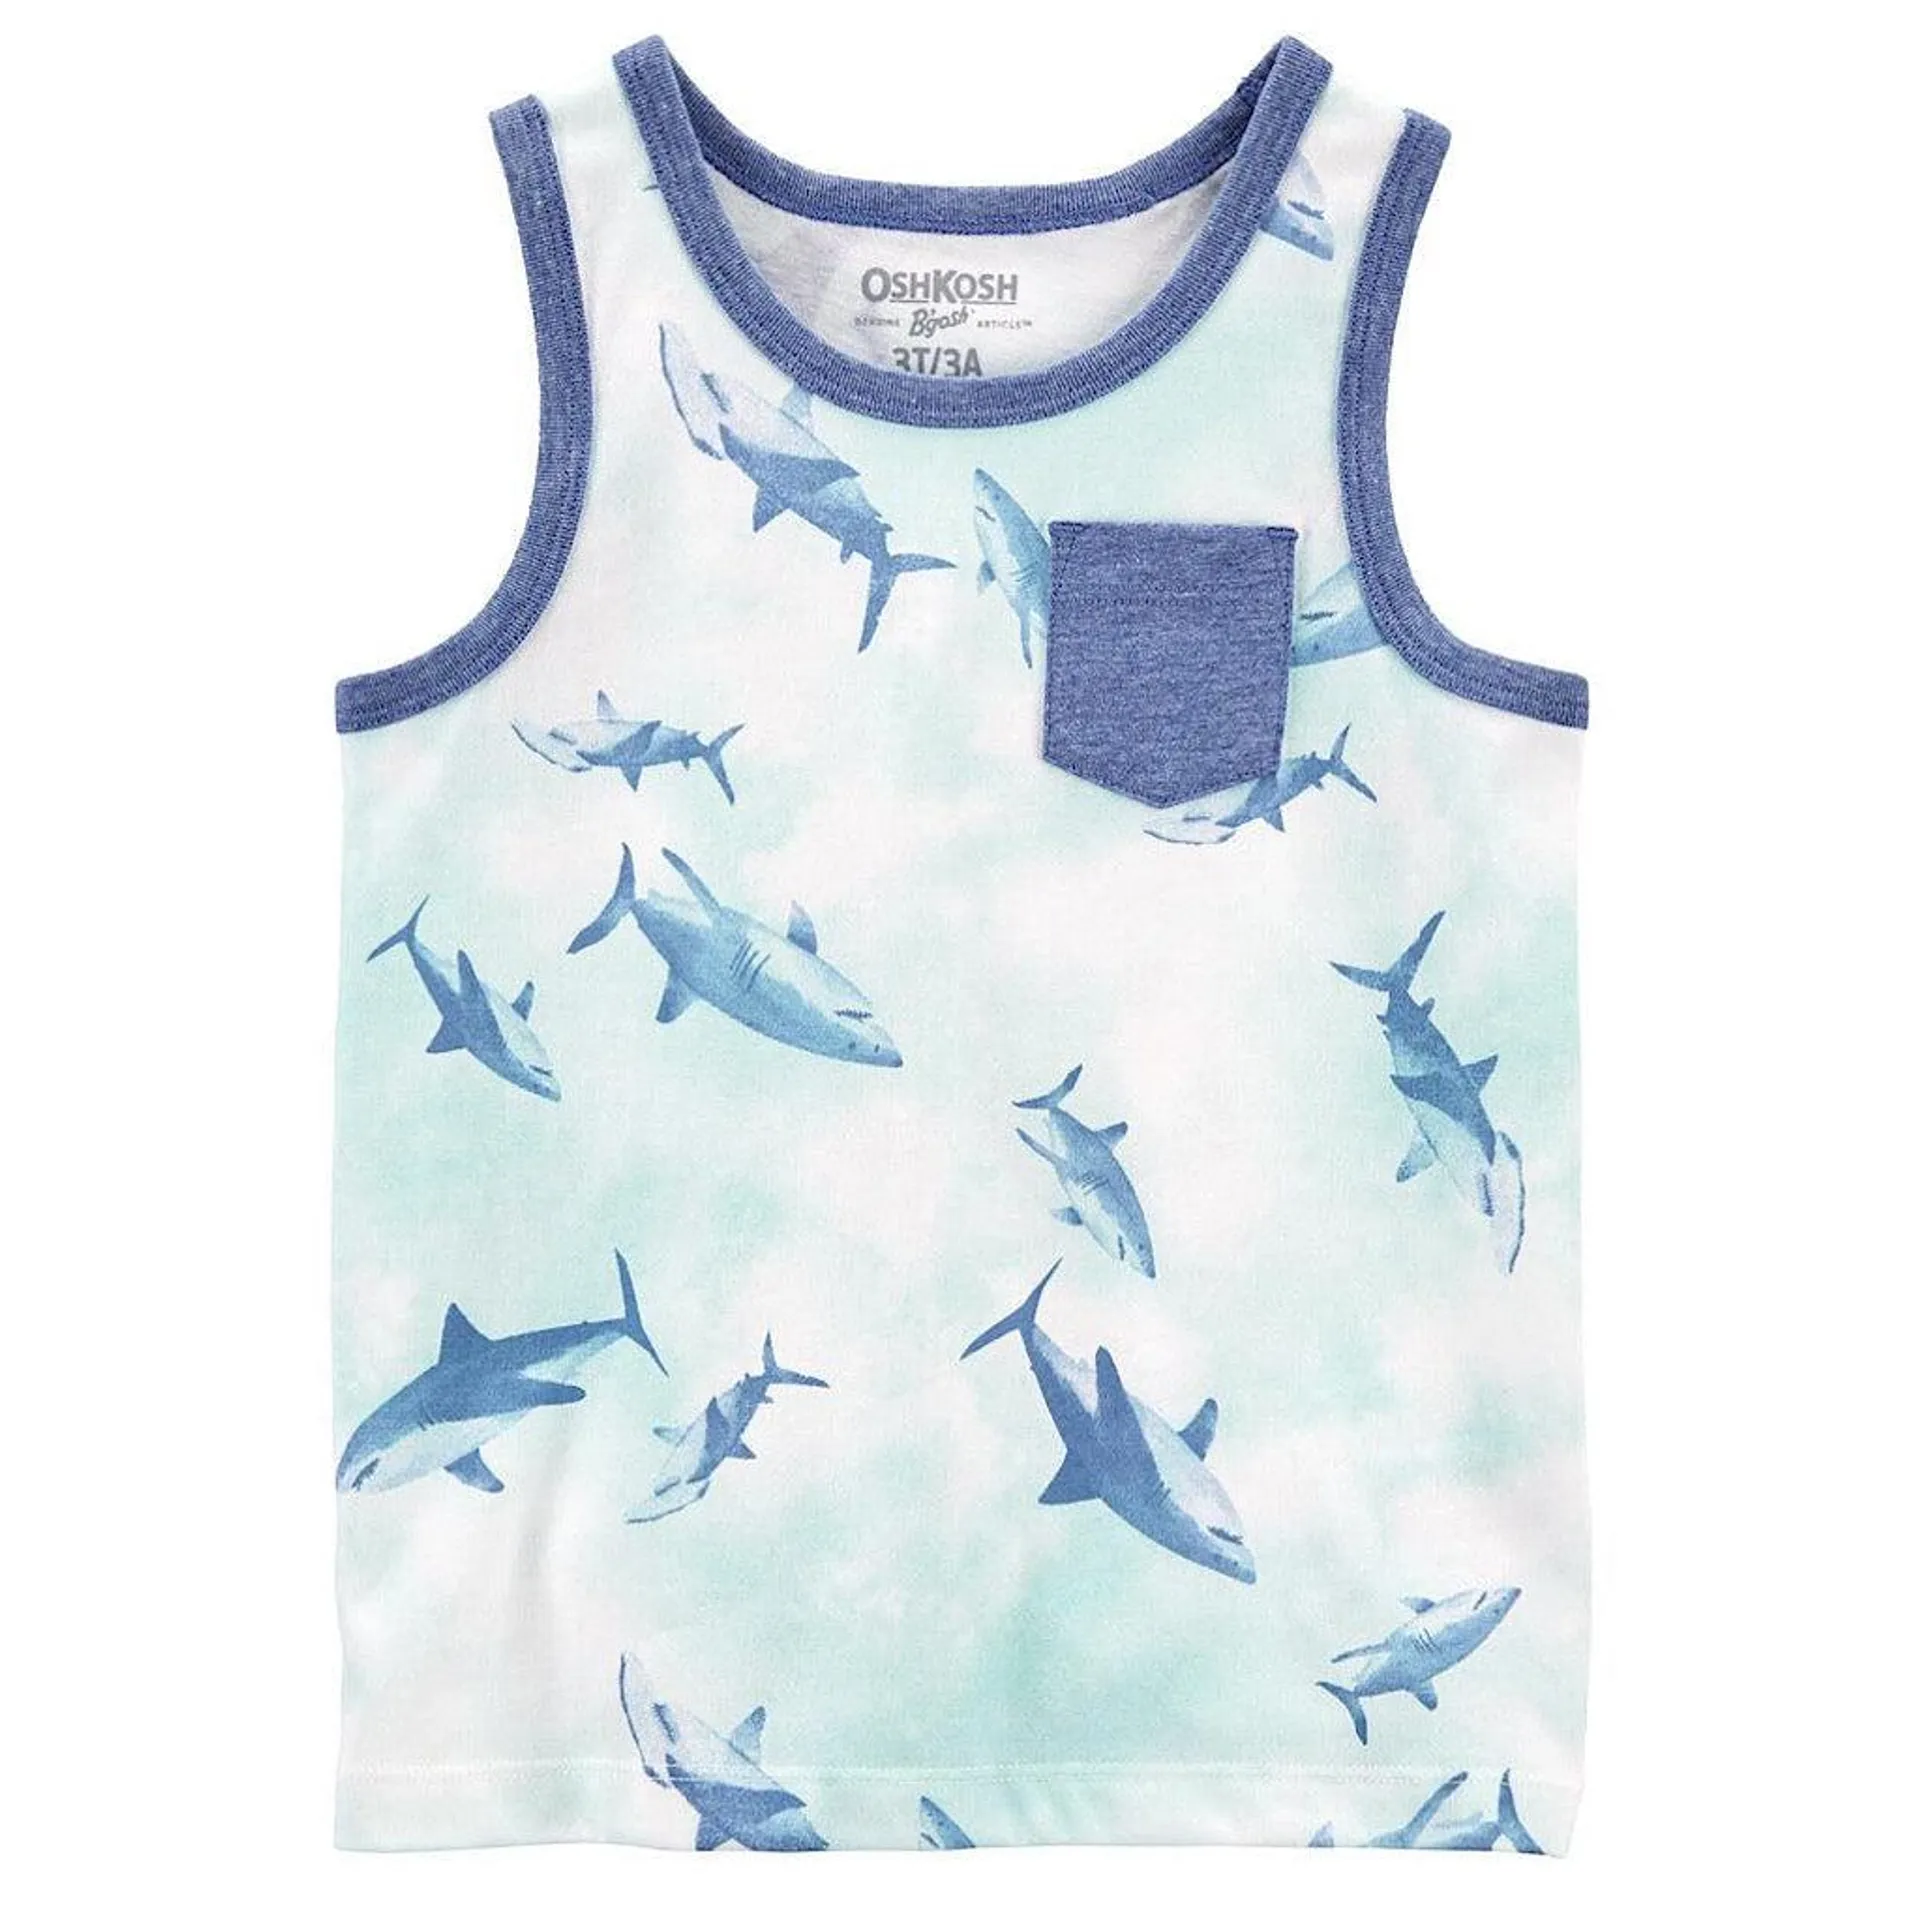 Camiseta sin mangas con tiburones Oshkosh para niño